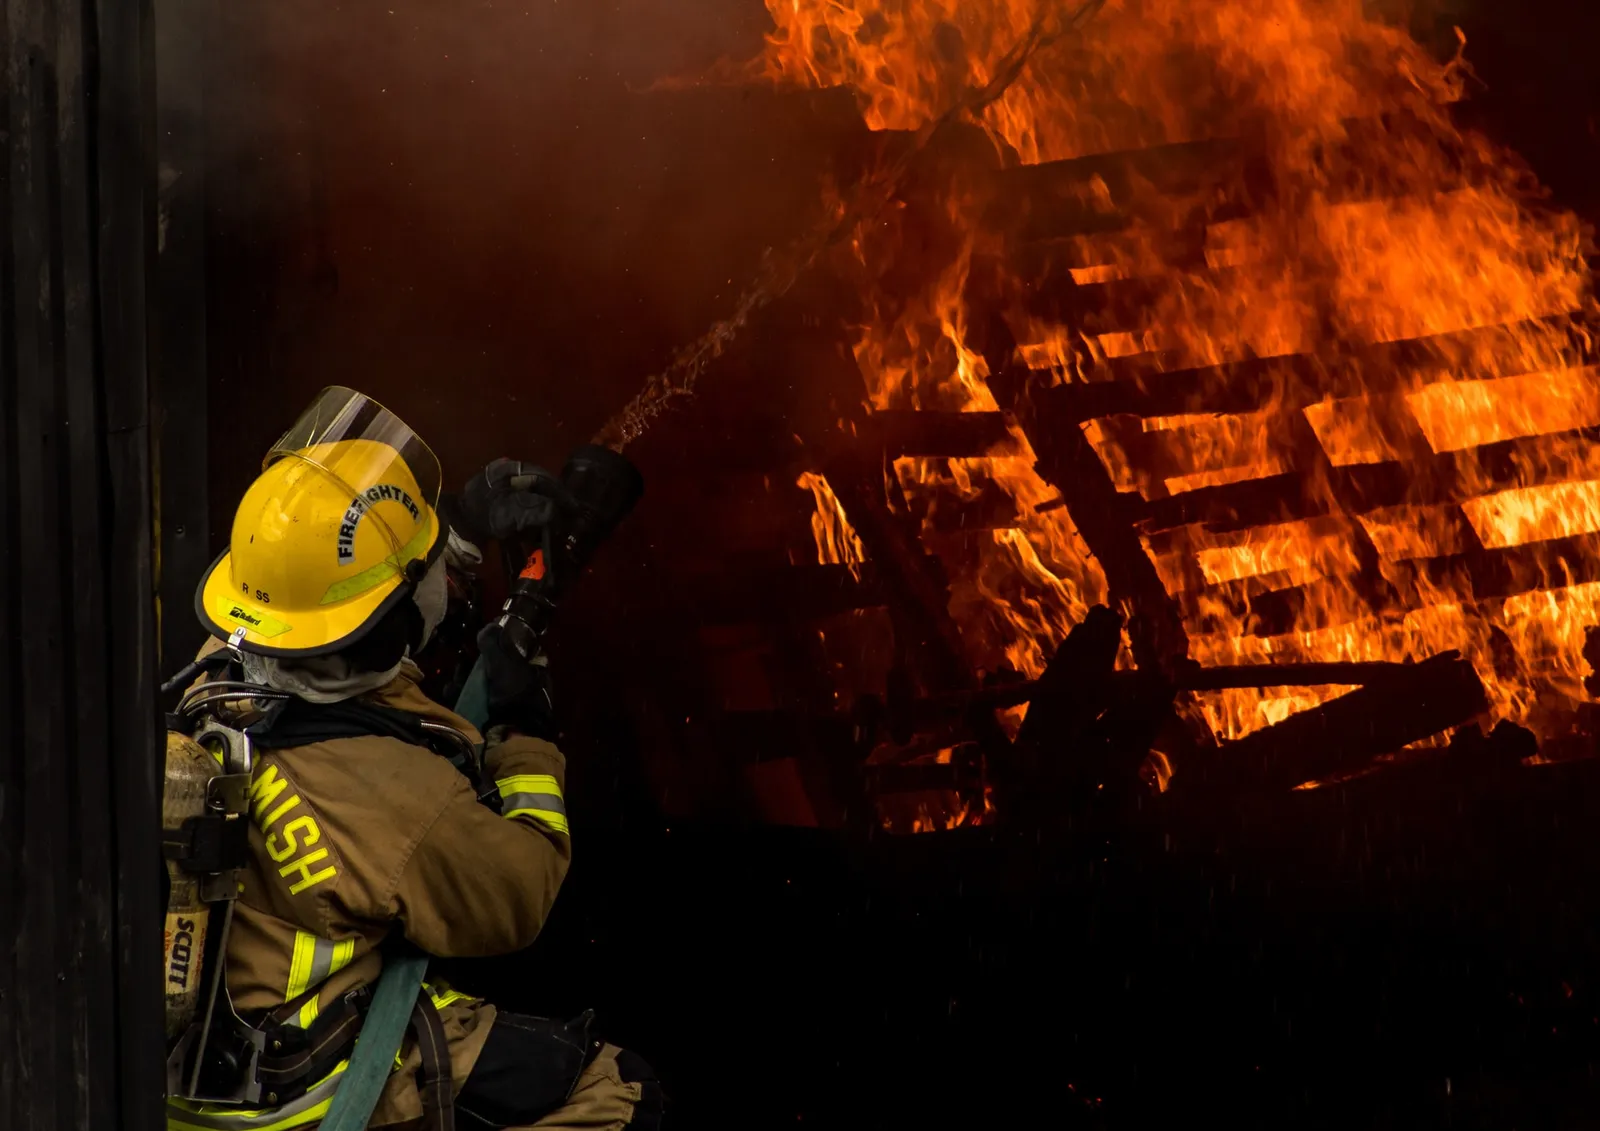 Tidak Selalu Pertanda Buruk, Ini 10 Arti Mimpi Melihat Rumah Kebakaran